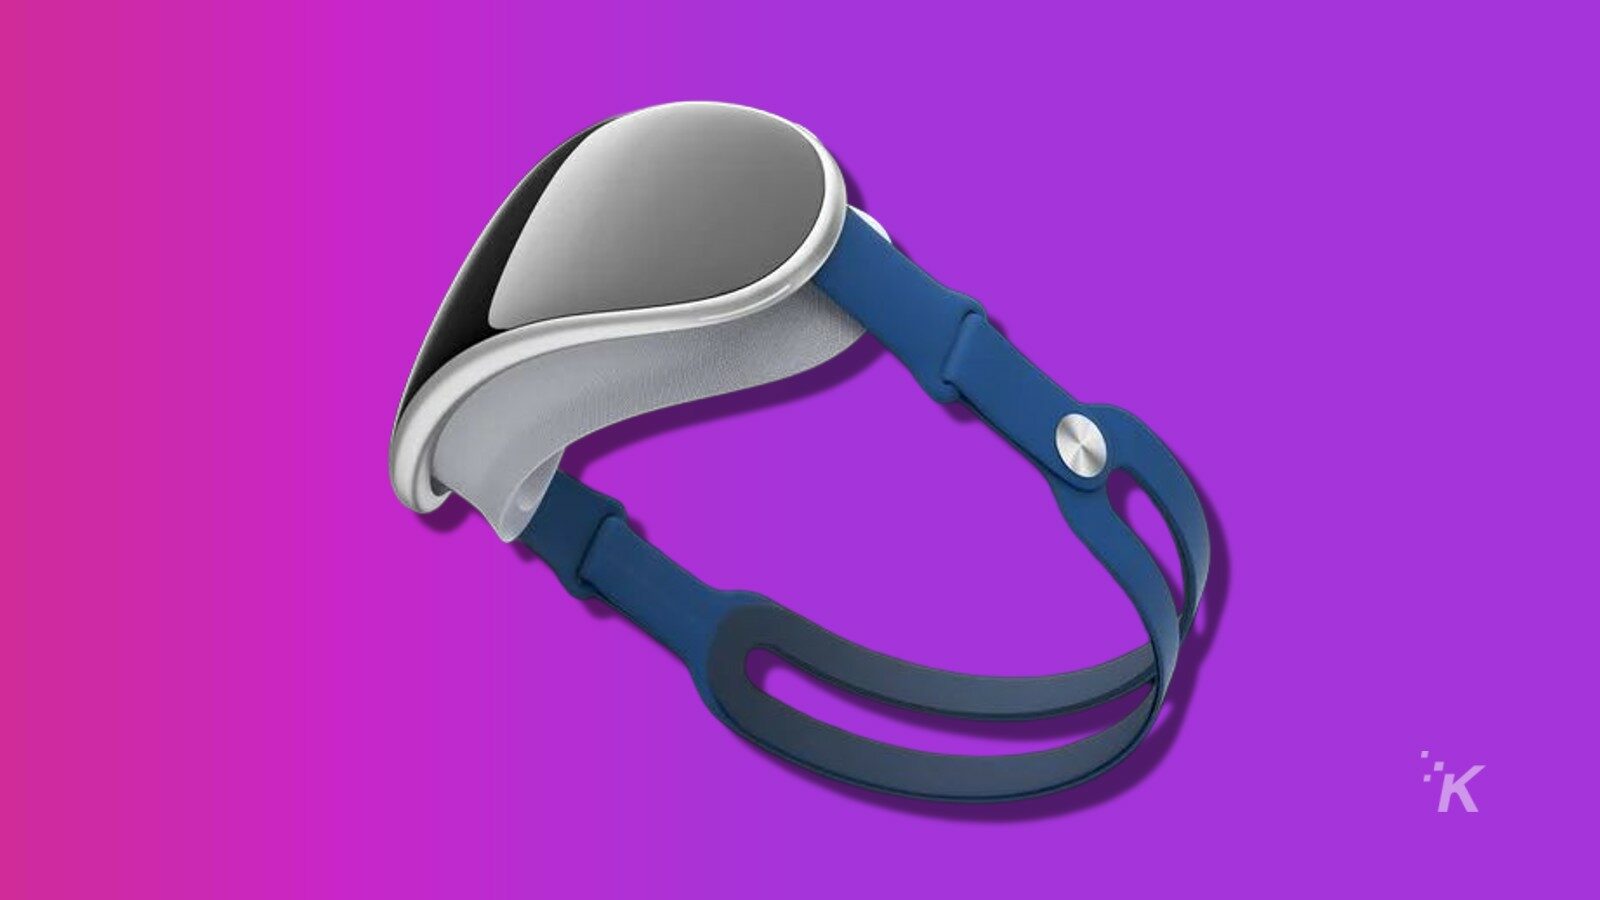 apple vr headset render on a purple background